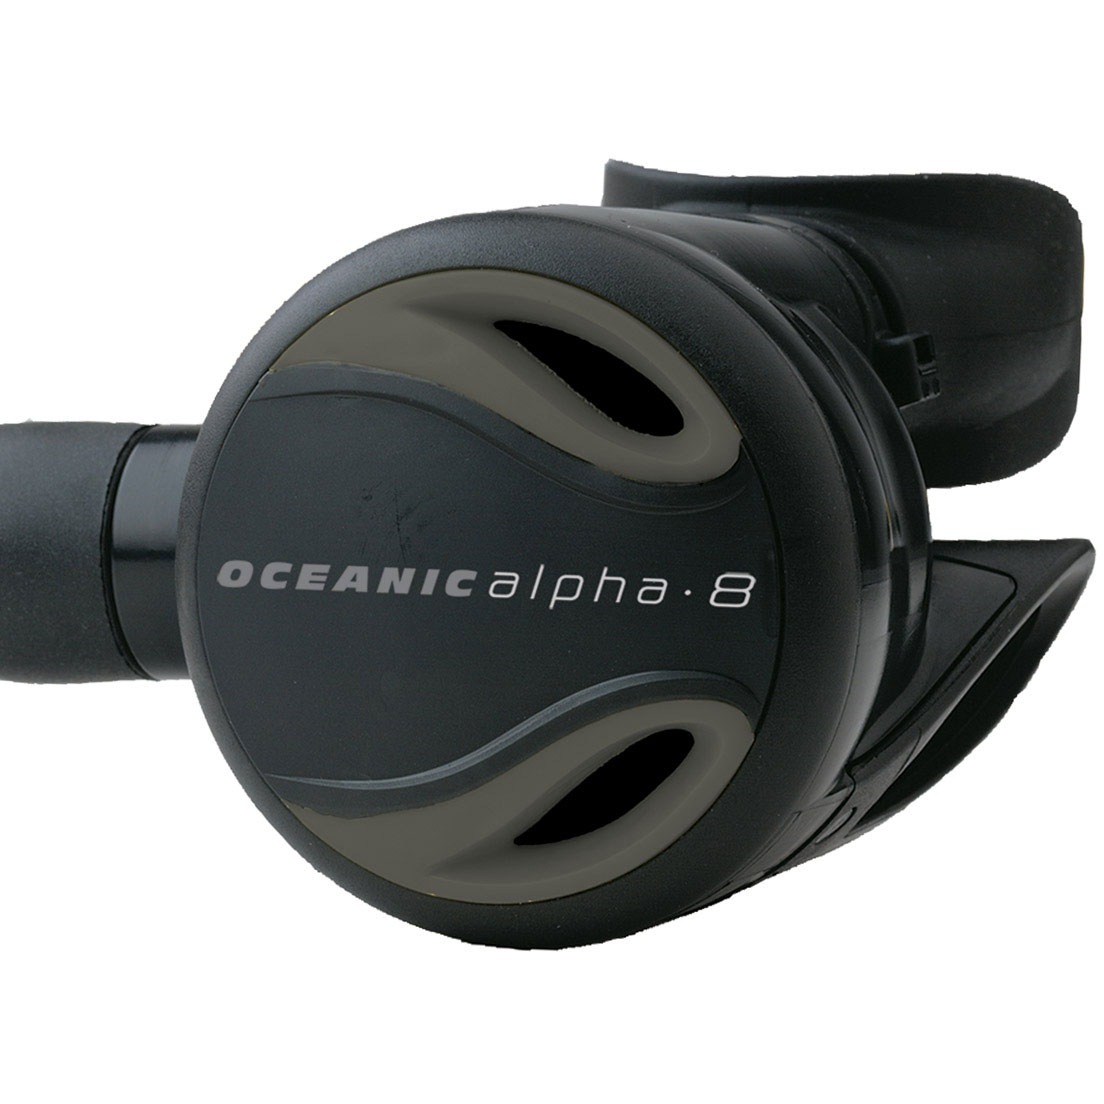 Oceanic Alpha 8 Second Stage Regulator Only No Hose